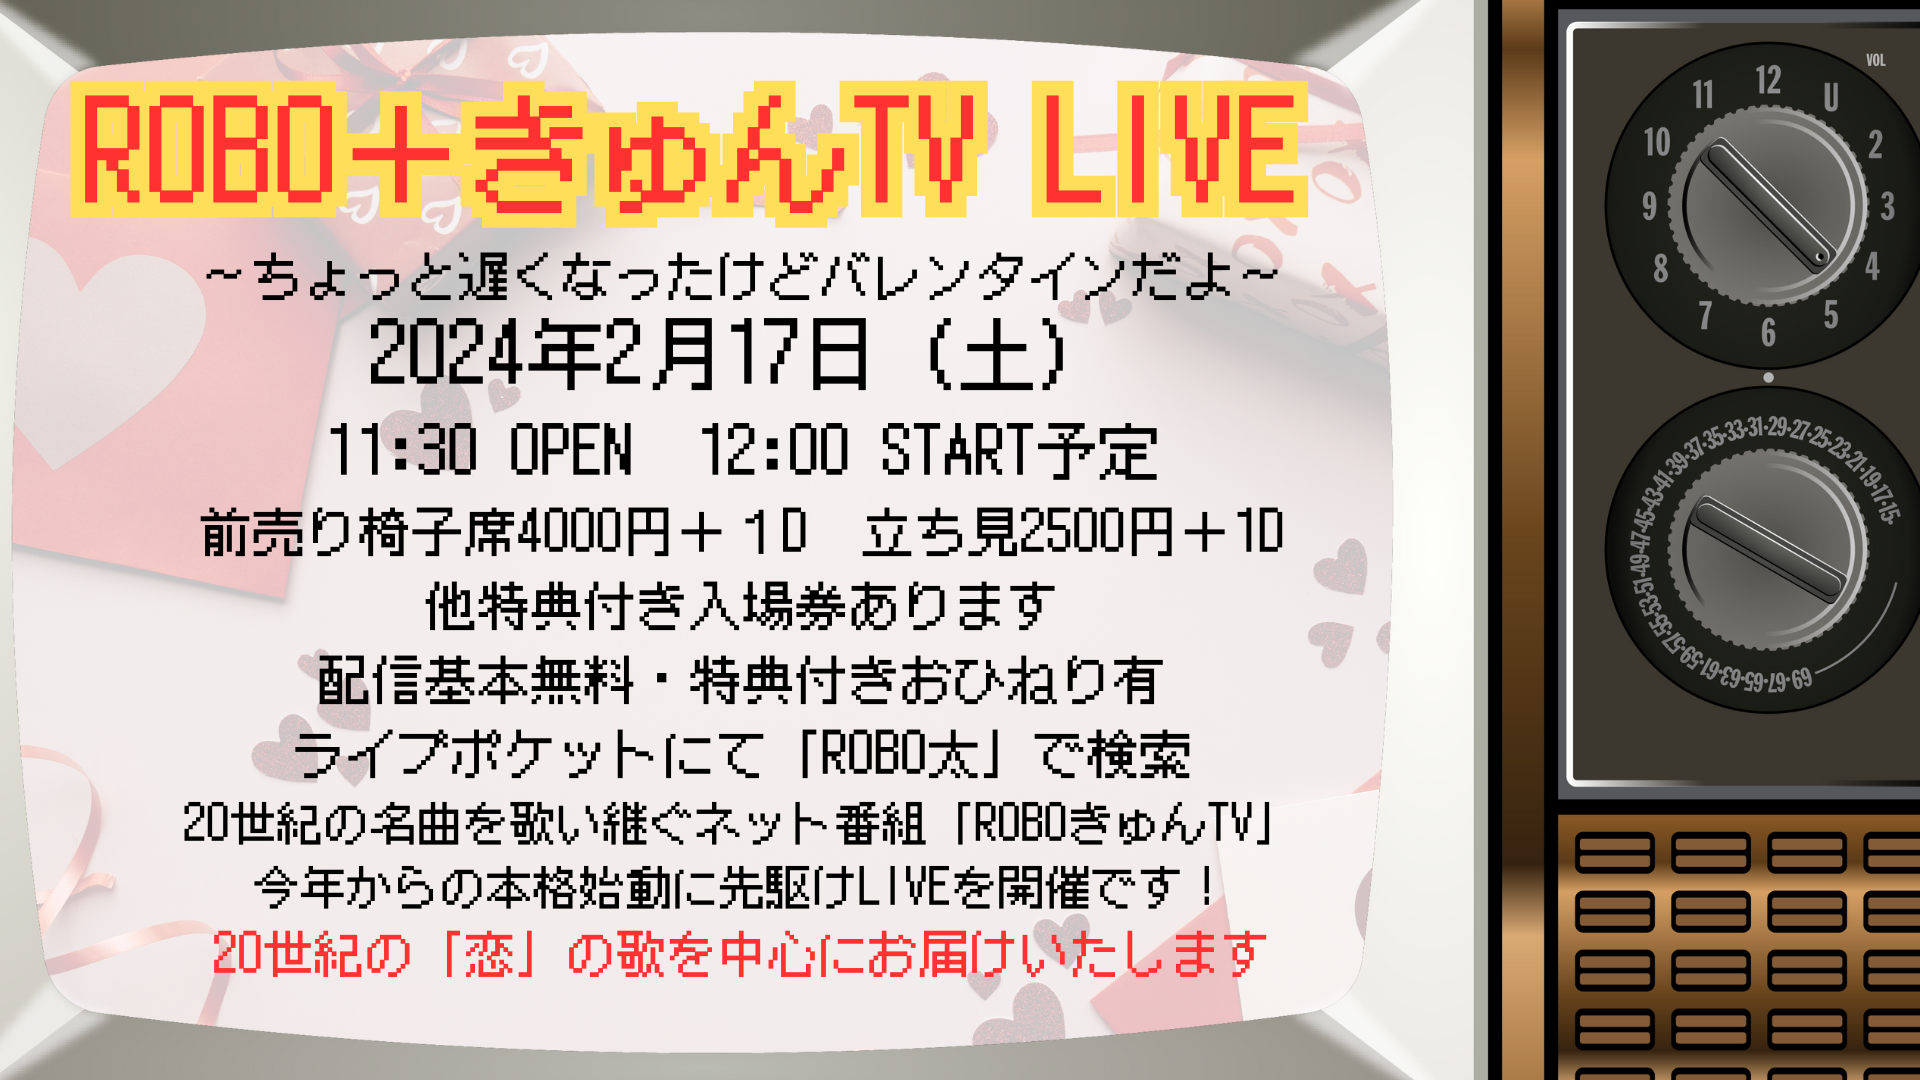 ROBO+きゅんTV LIVE